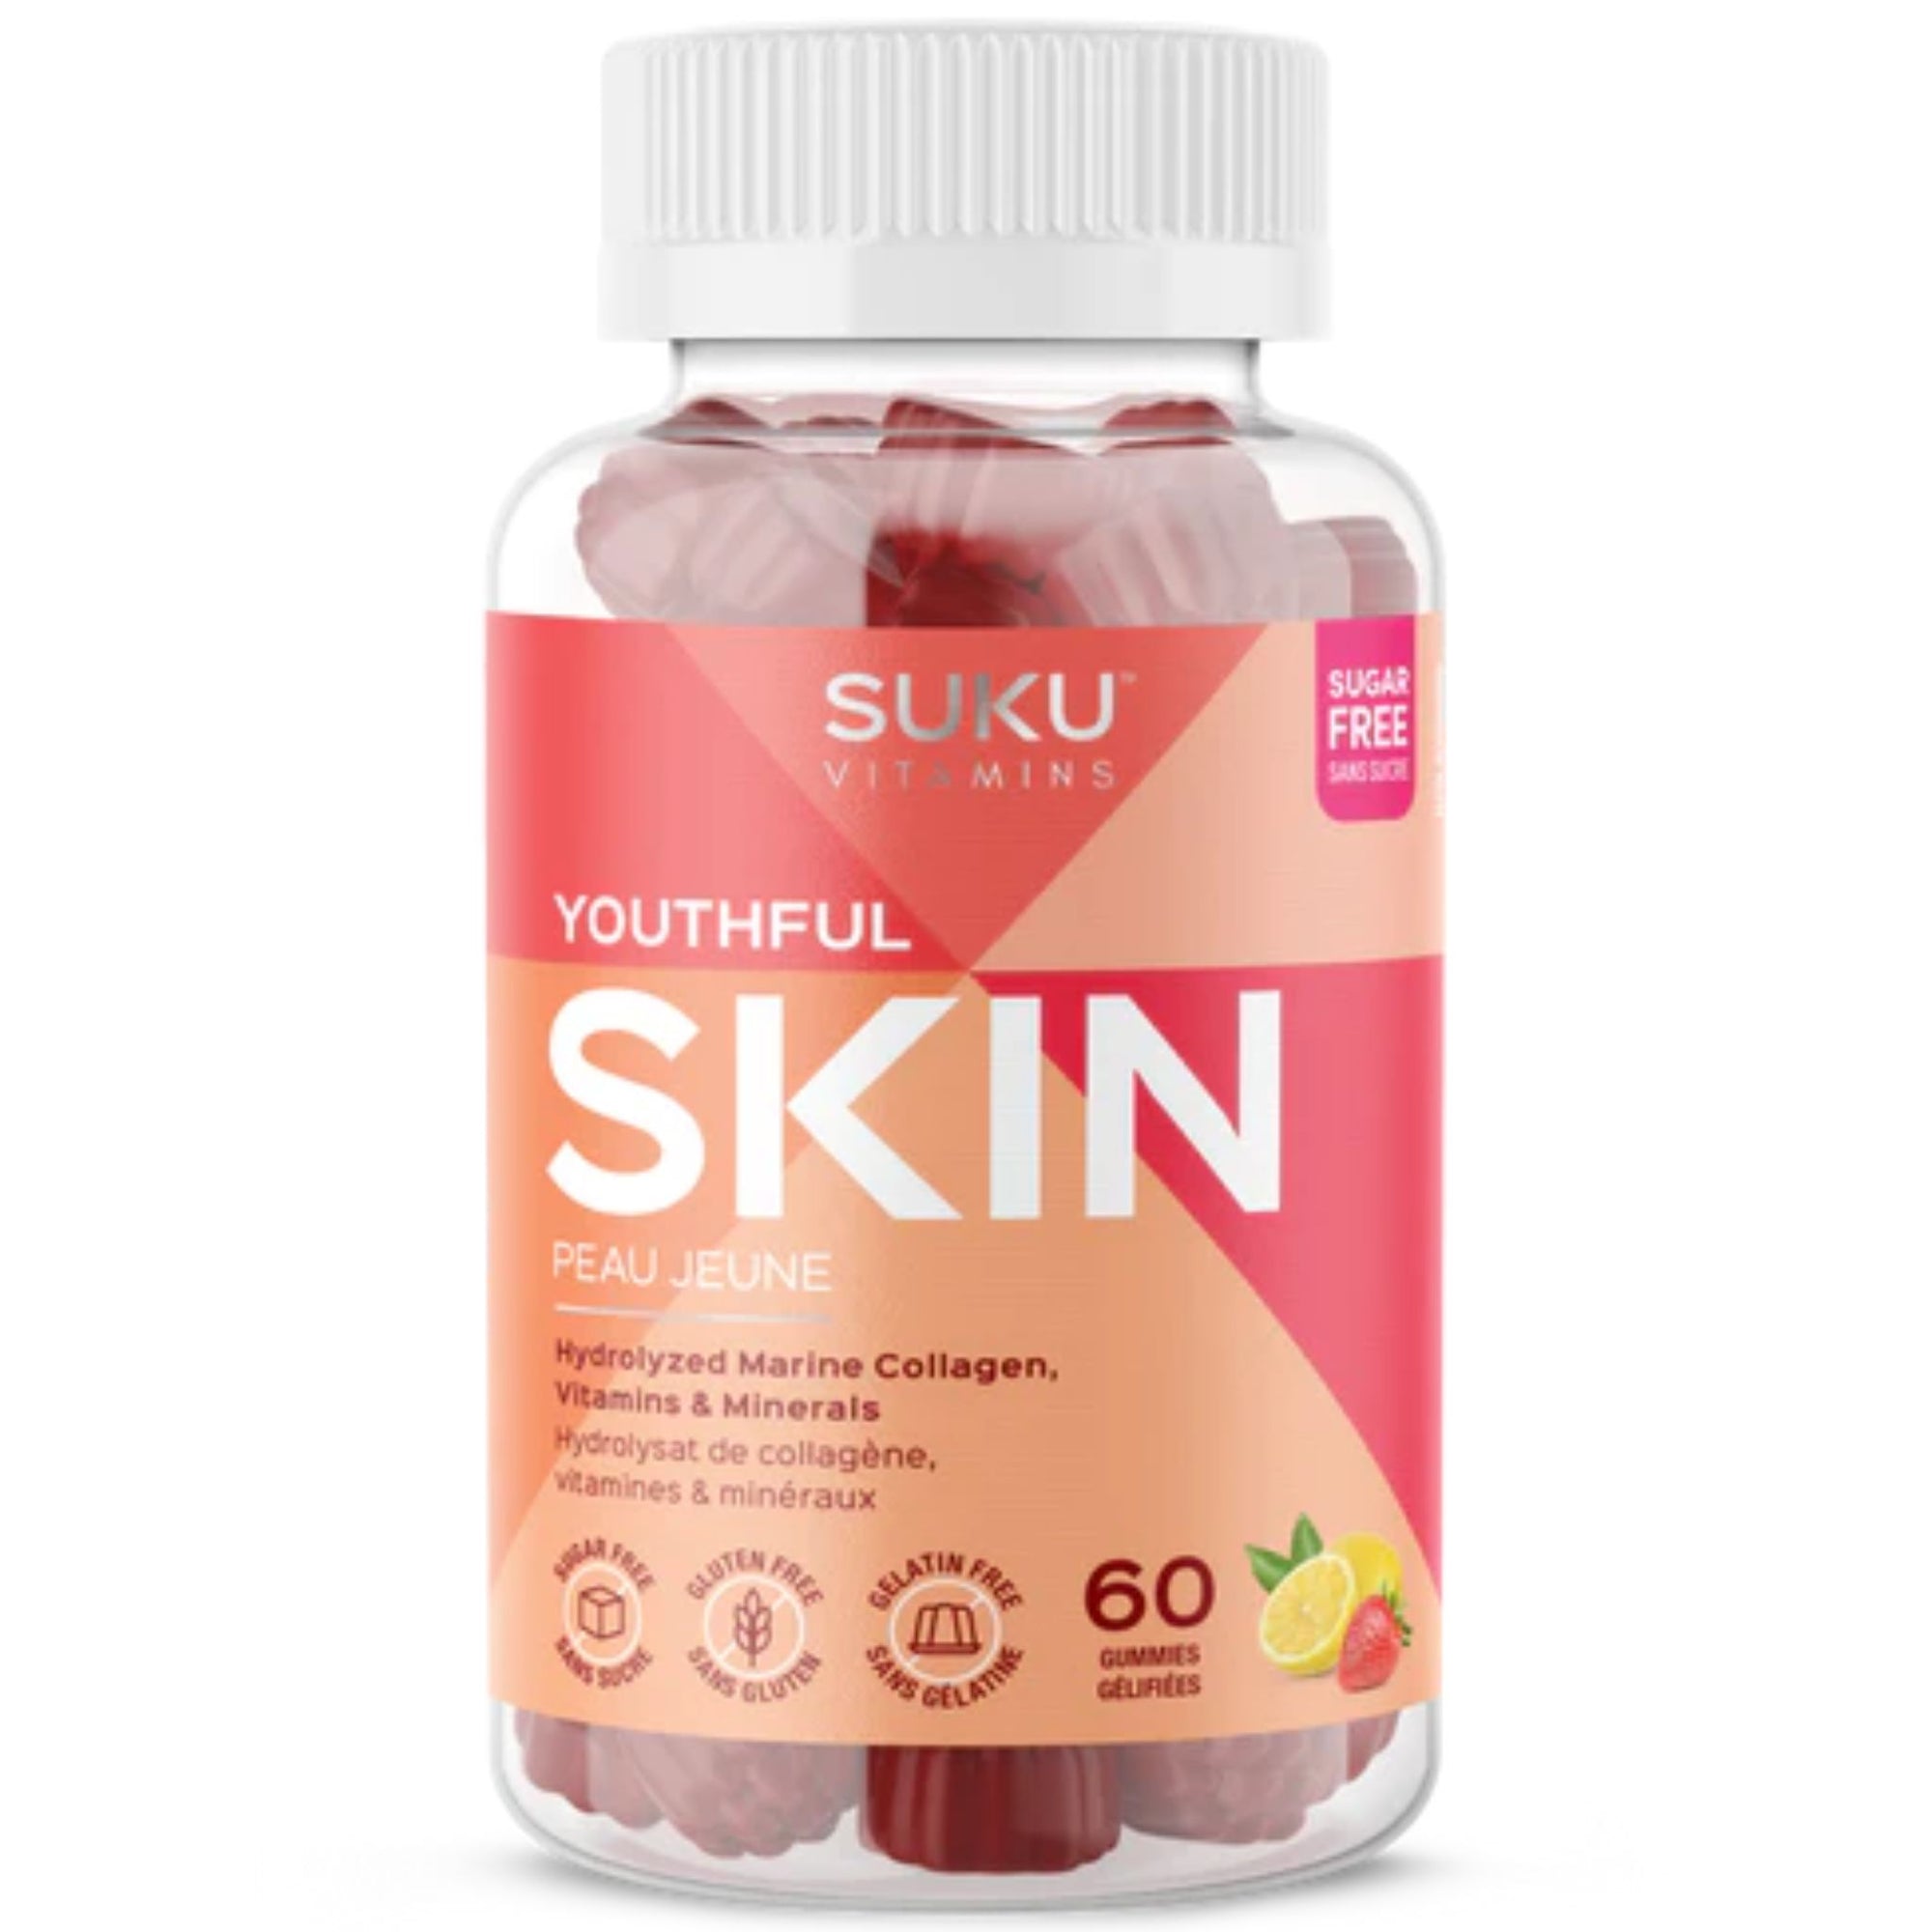 Suku Youthful Skin 60 Gummies bottle - Hydrolyzed collagen, vitamins & mineral blend. 